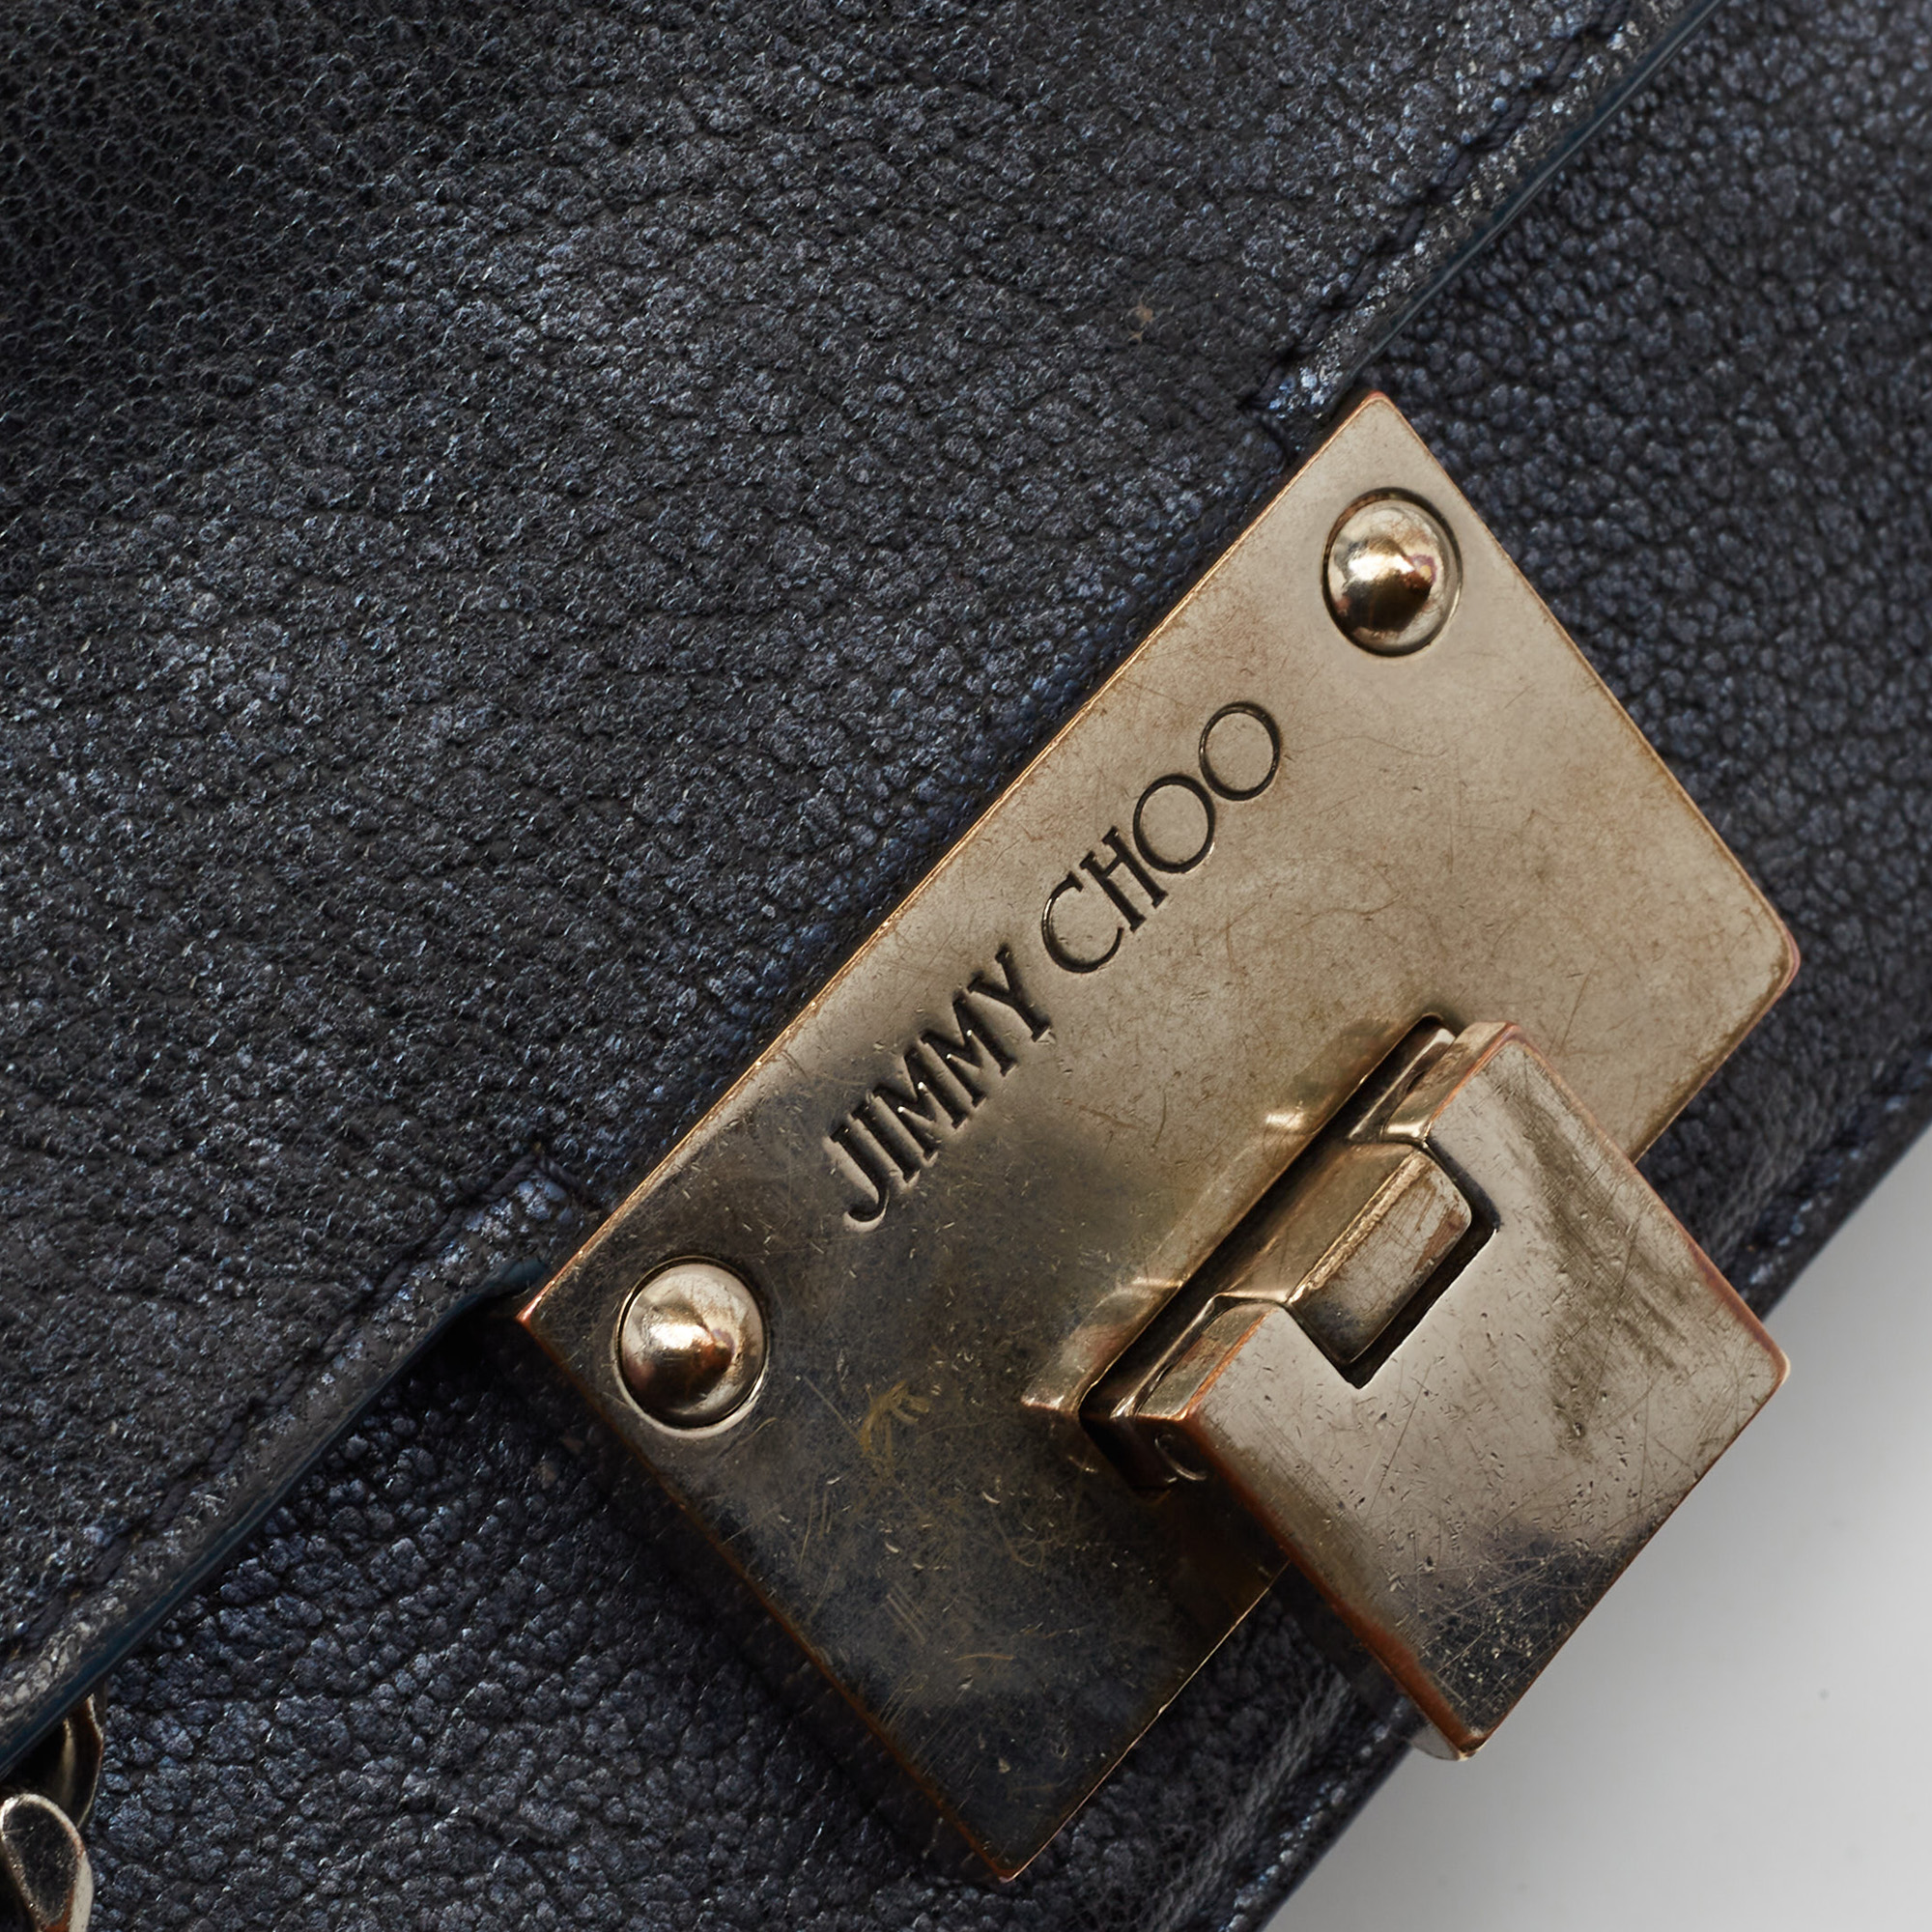 Jimmy Choo Metallic Blue Leather Rebel Crossbody Bag